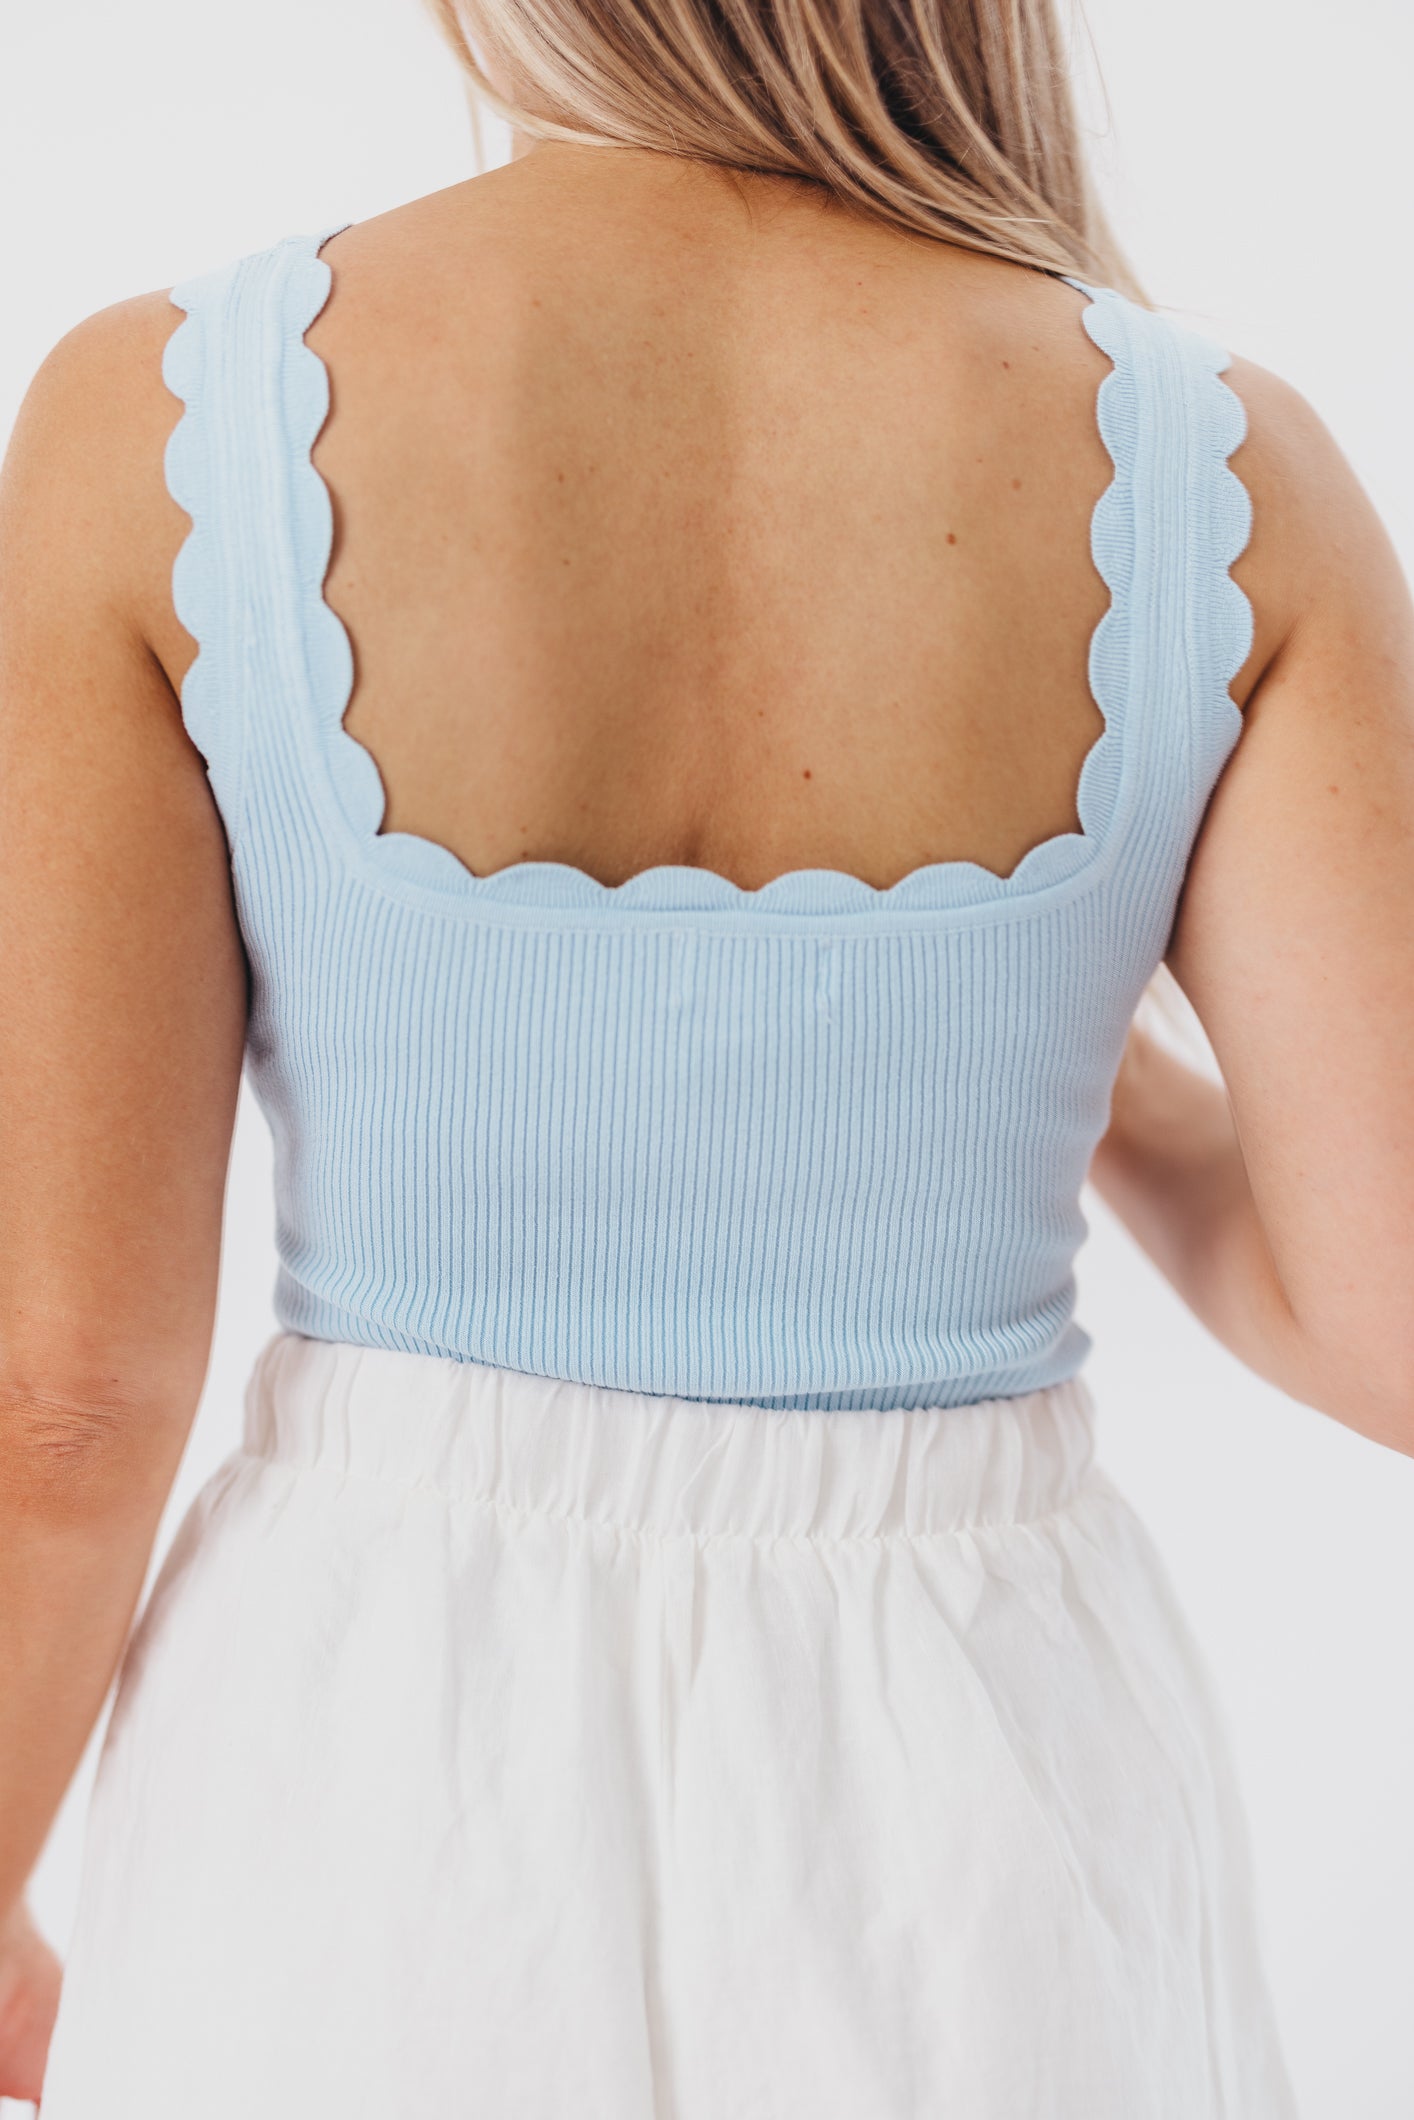 Gretel Knit Bodysuit with Scalloped Neckline in Light Blue